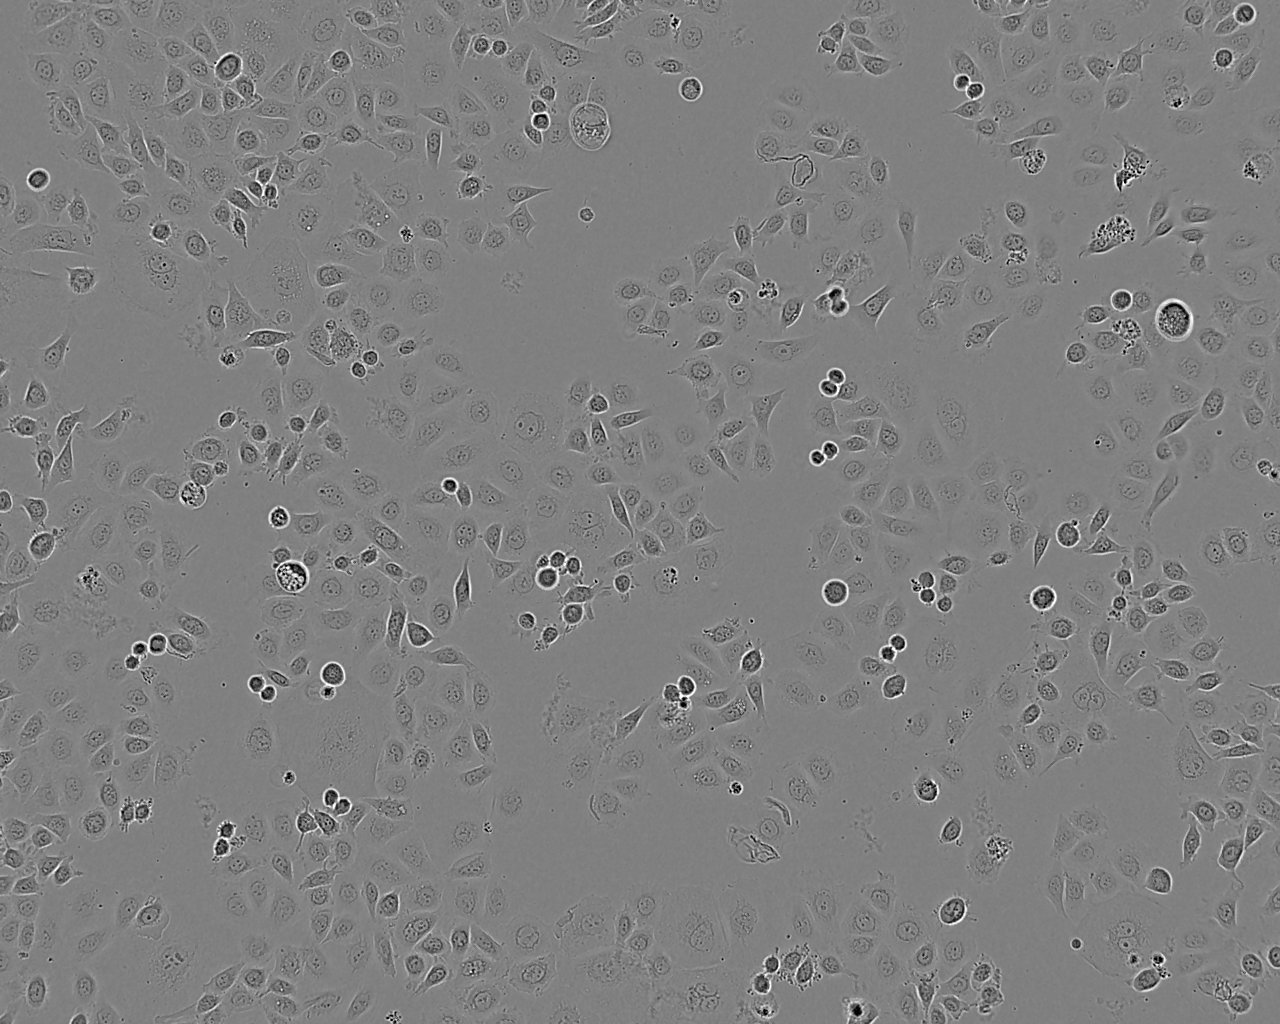 SLMT-1 cell line人食管鳞癌细胞系